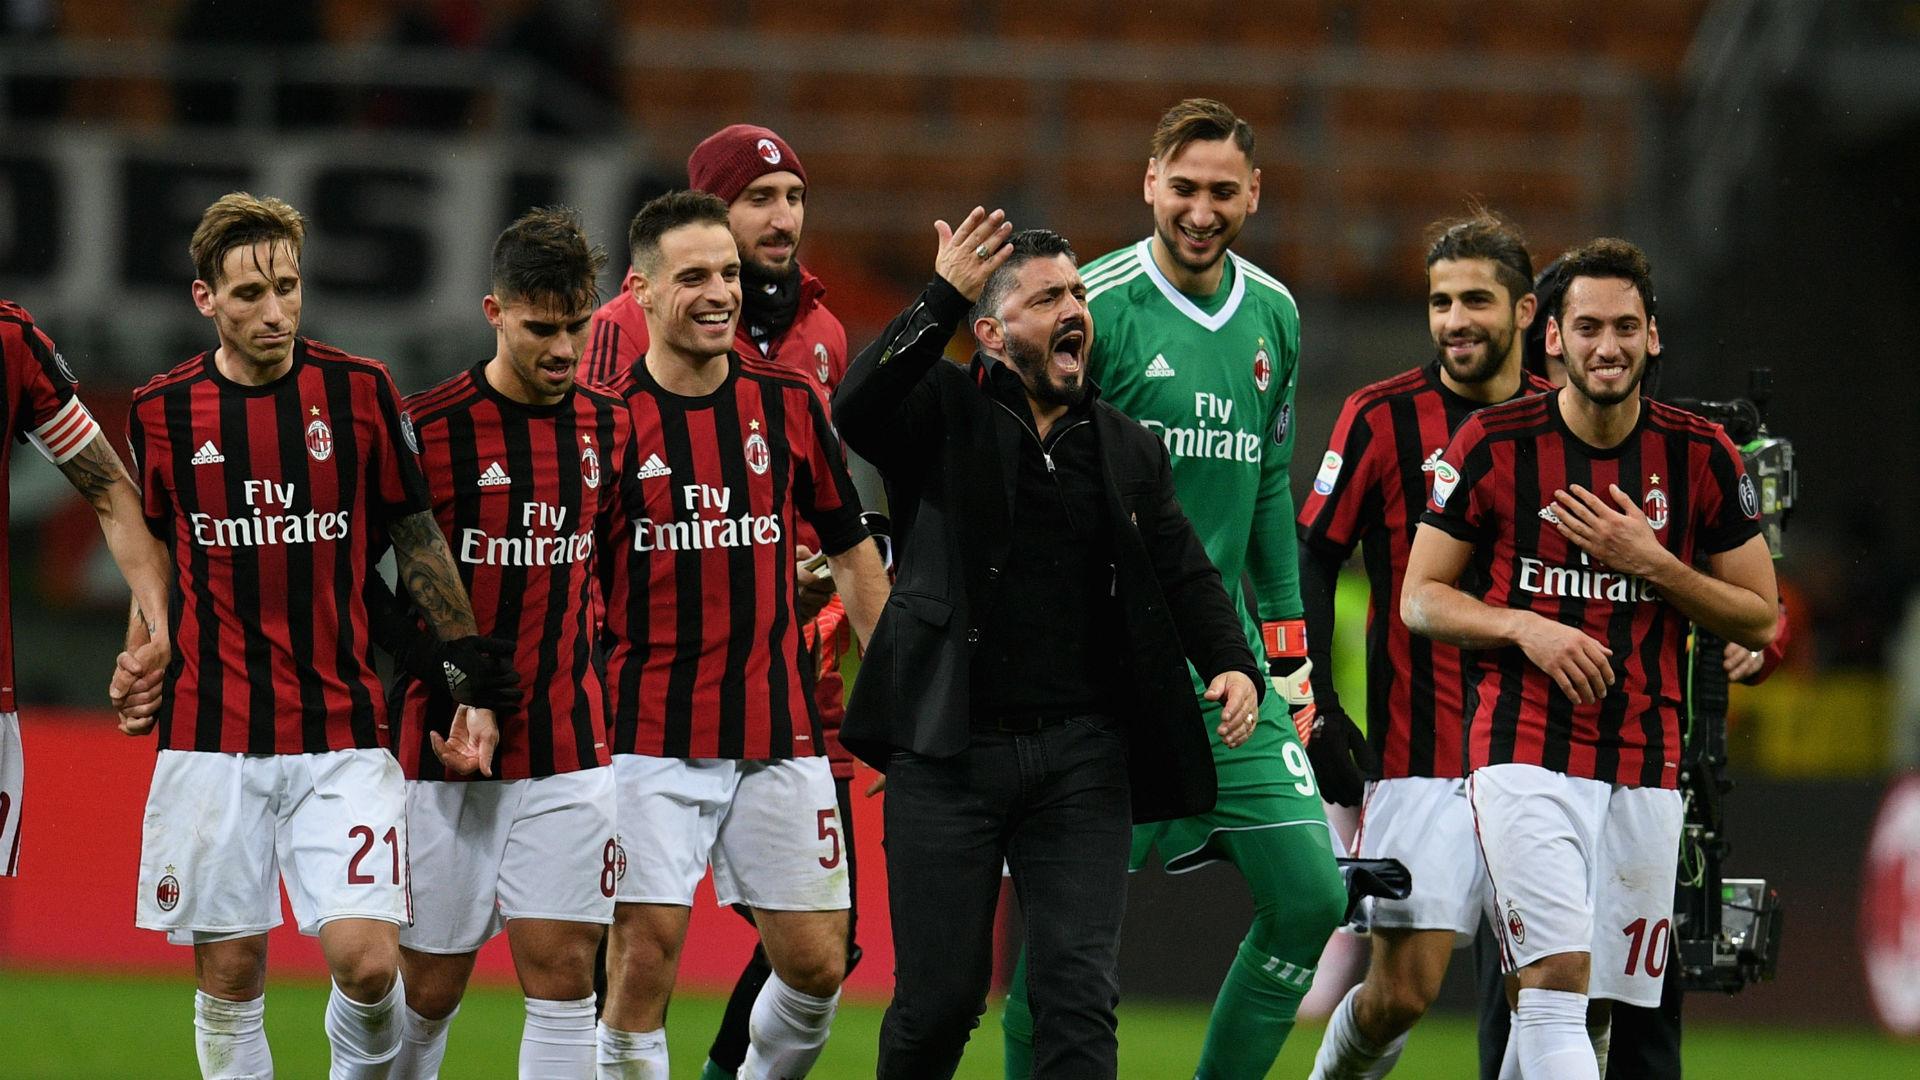 Gattuso has restored AC Milan's identity